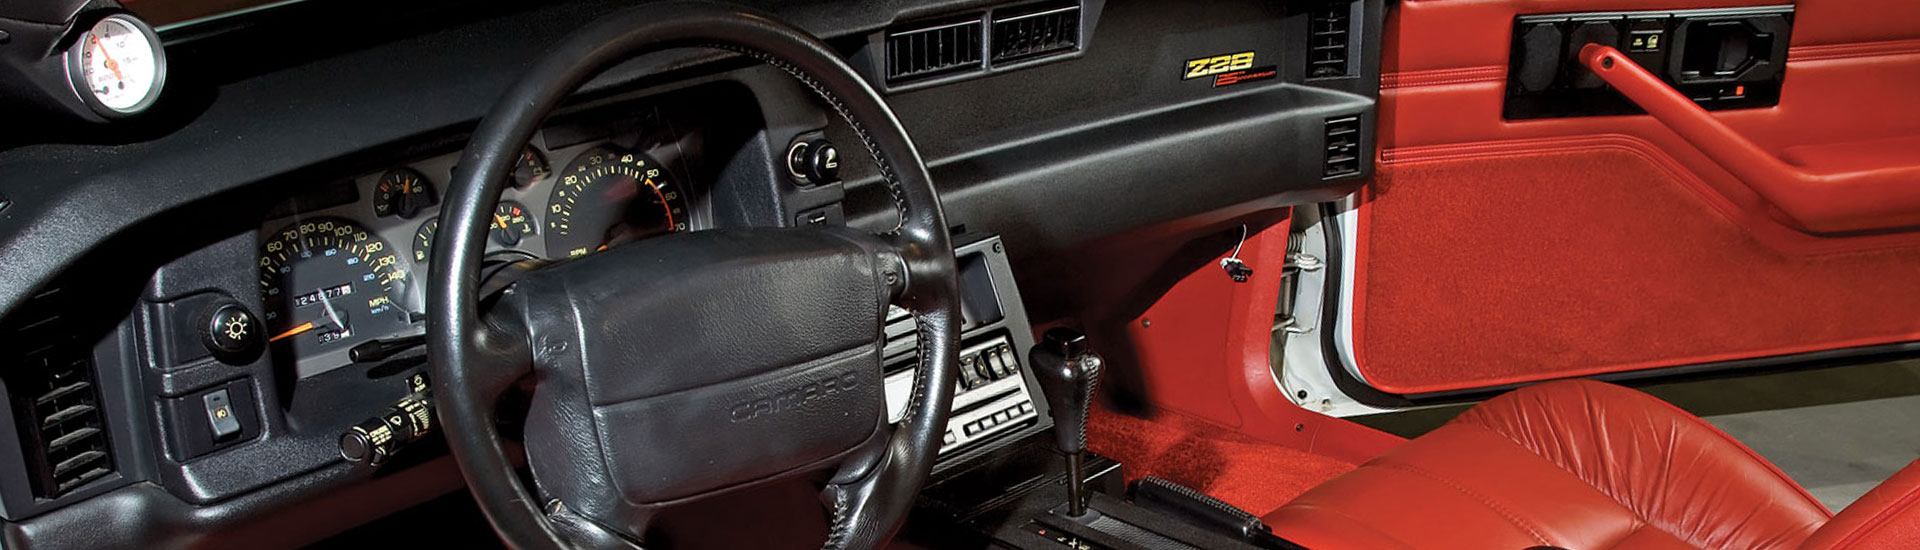 1990 Chevrolet Camaro Dash Kits